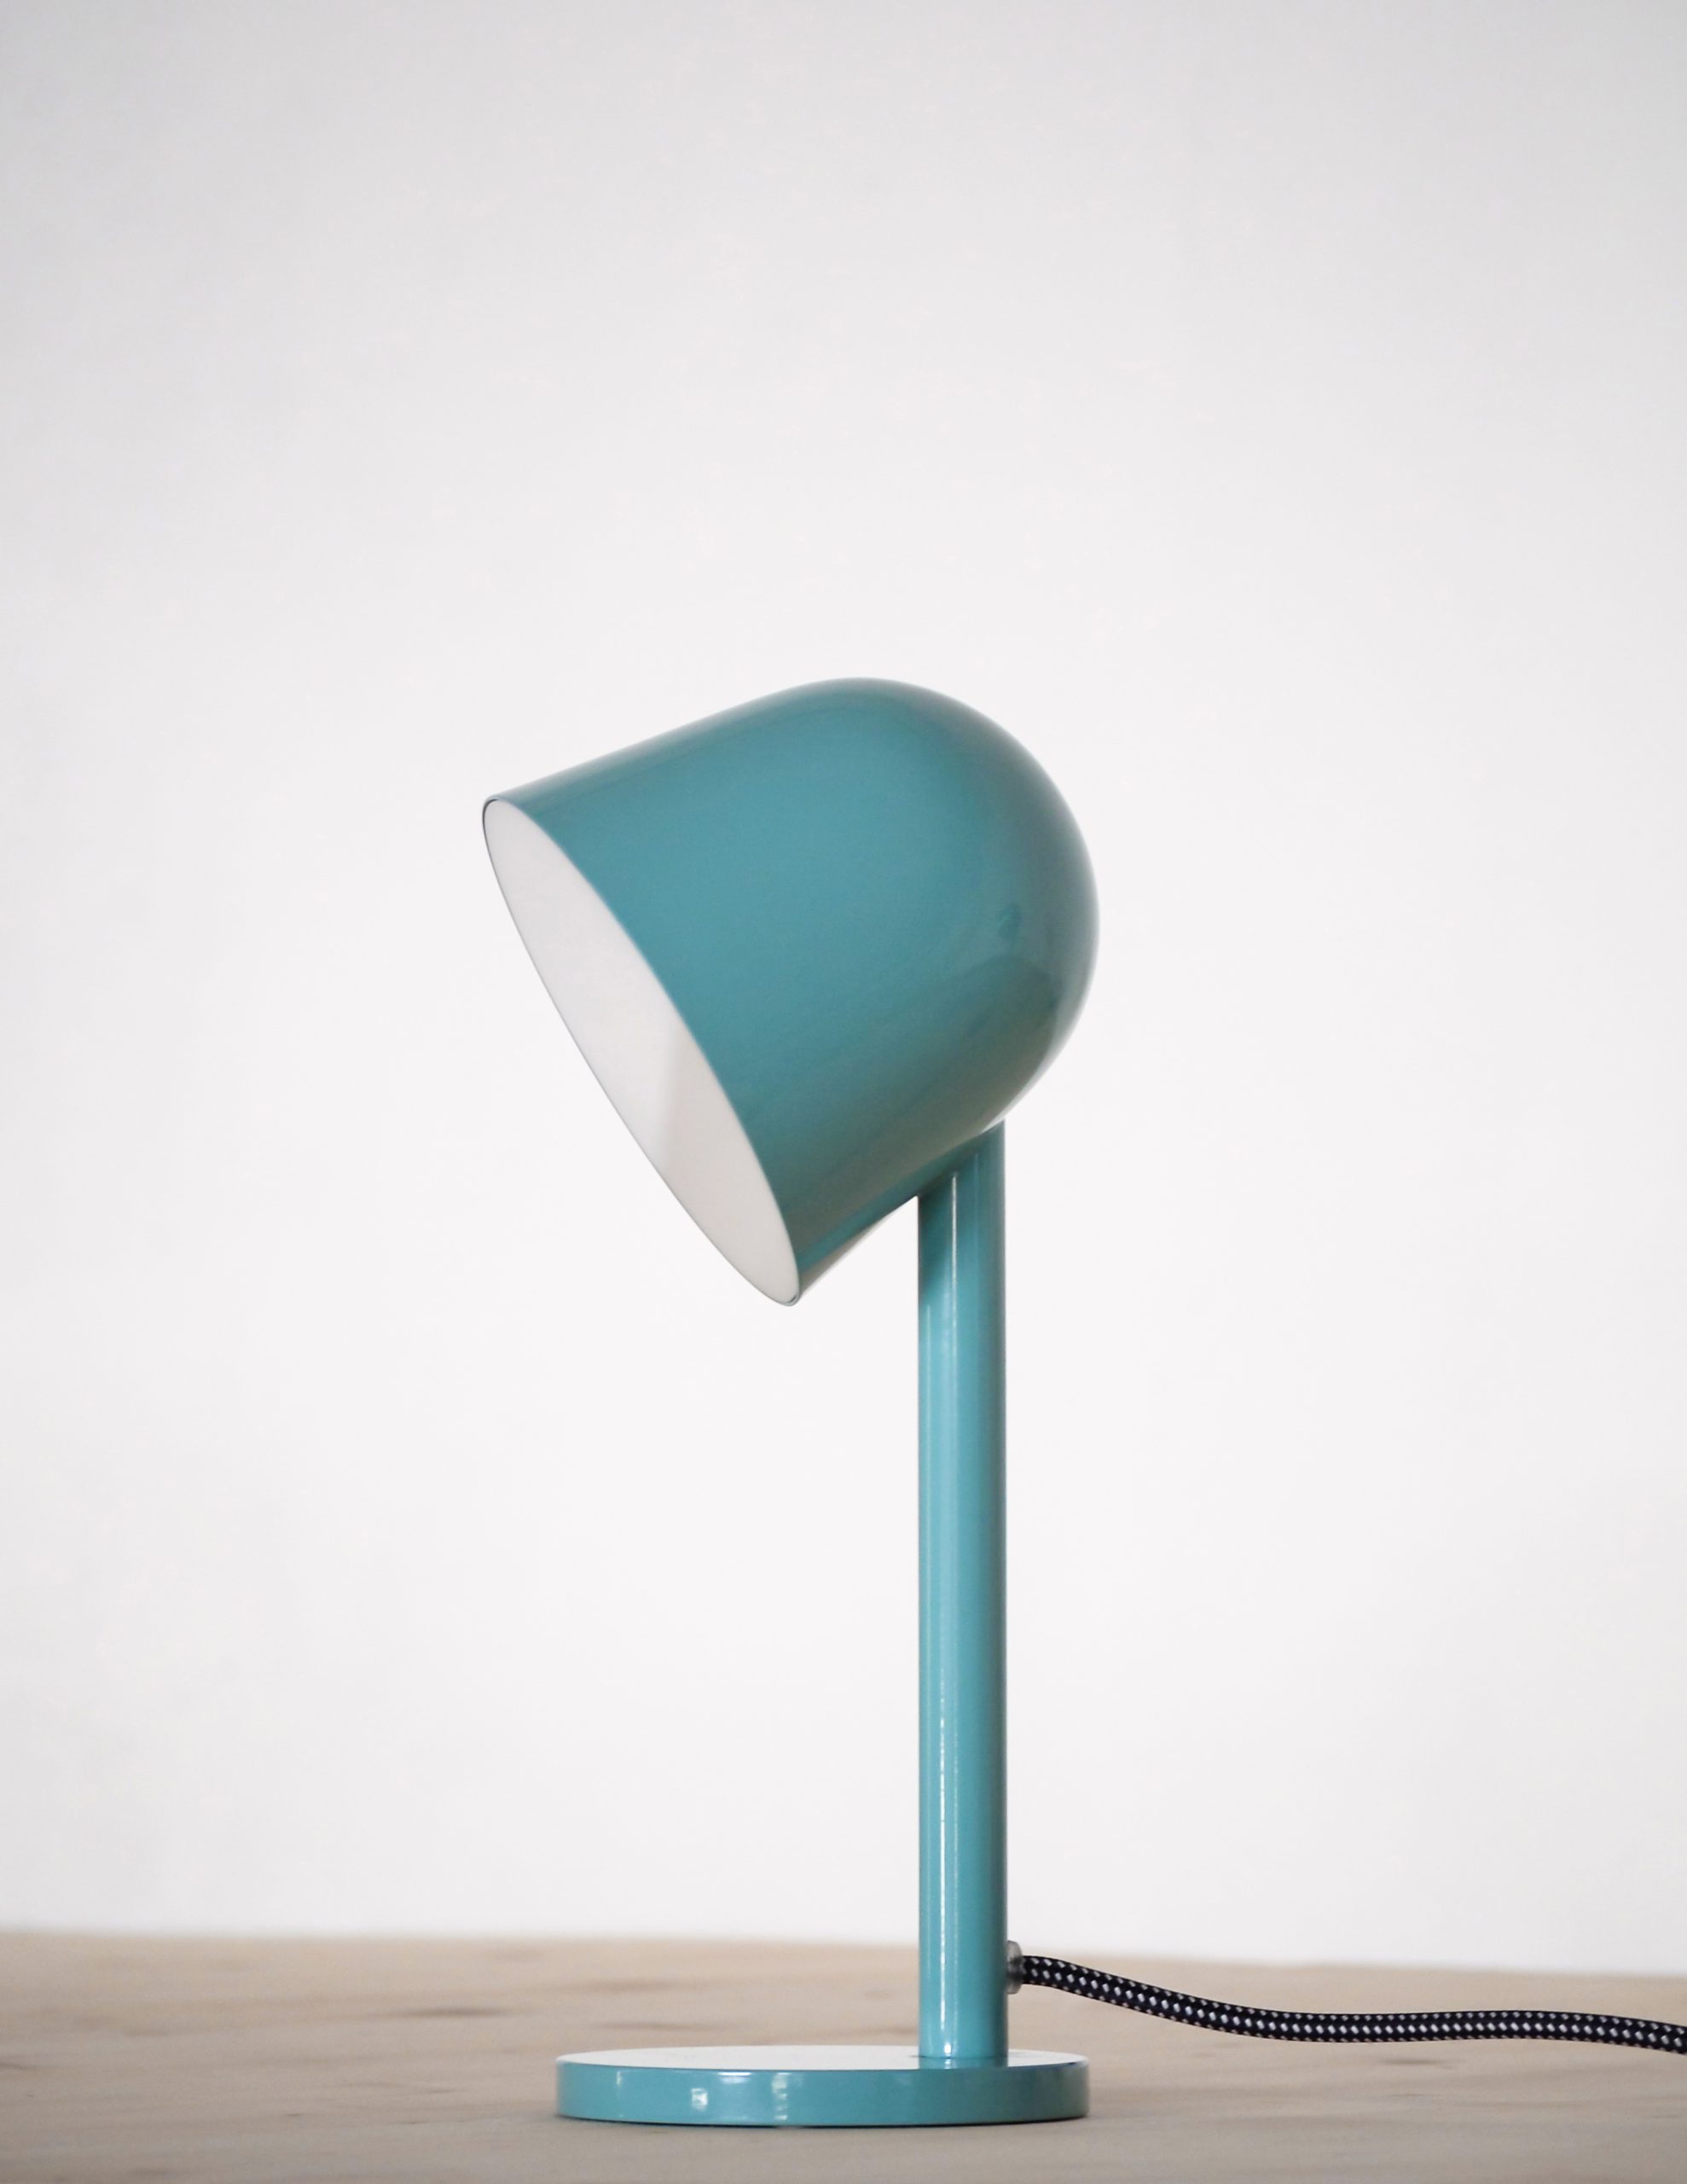 Sky blue Campanule lamp by Debiasi sandri for Ligne Roset